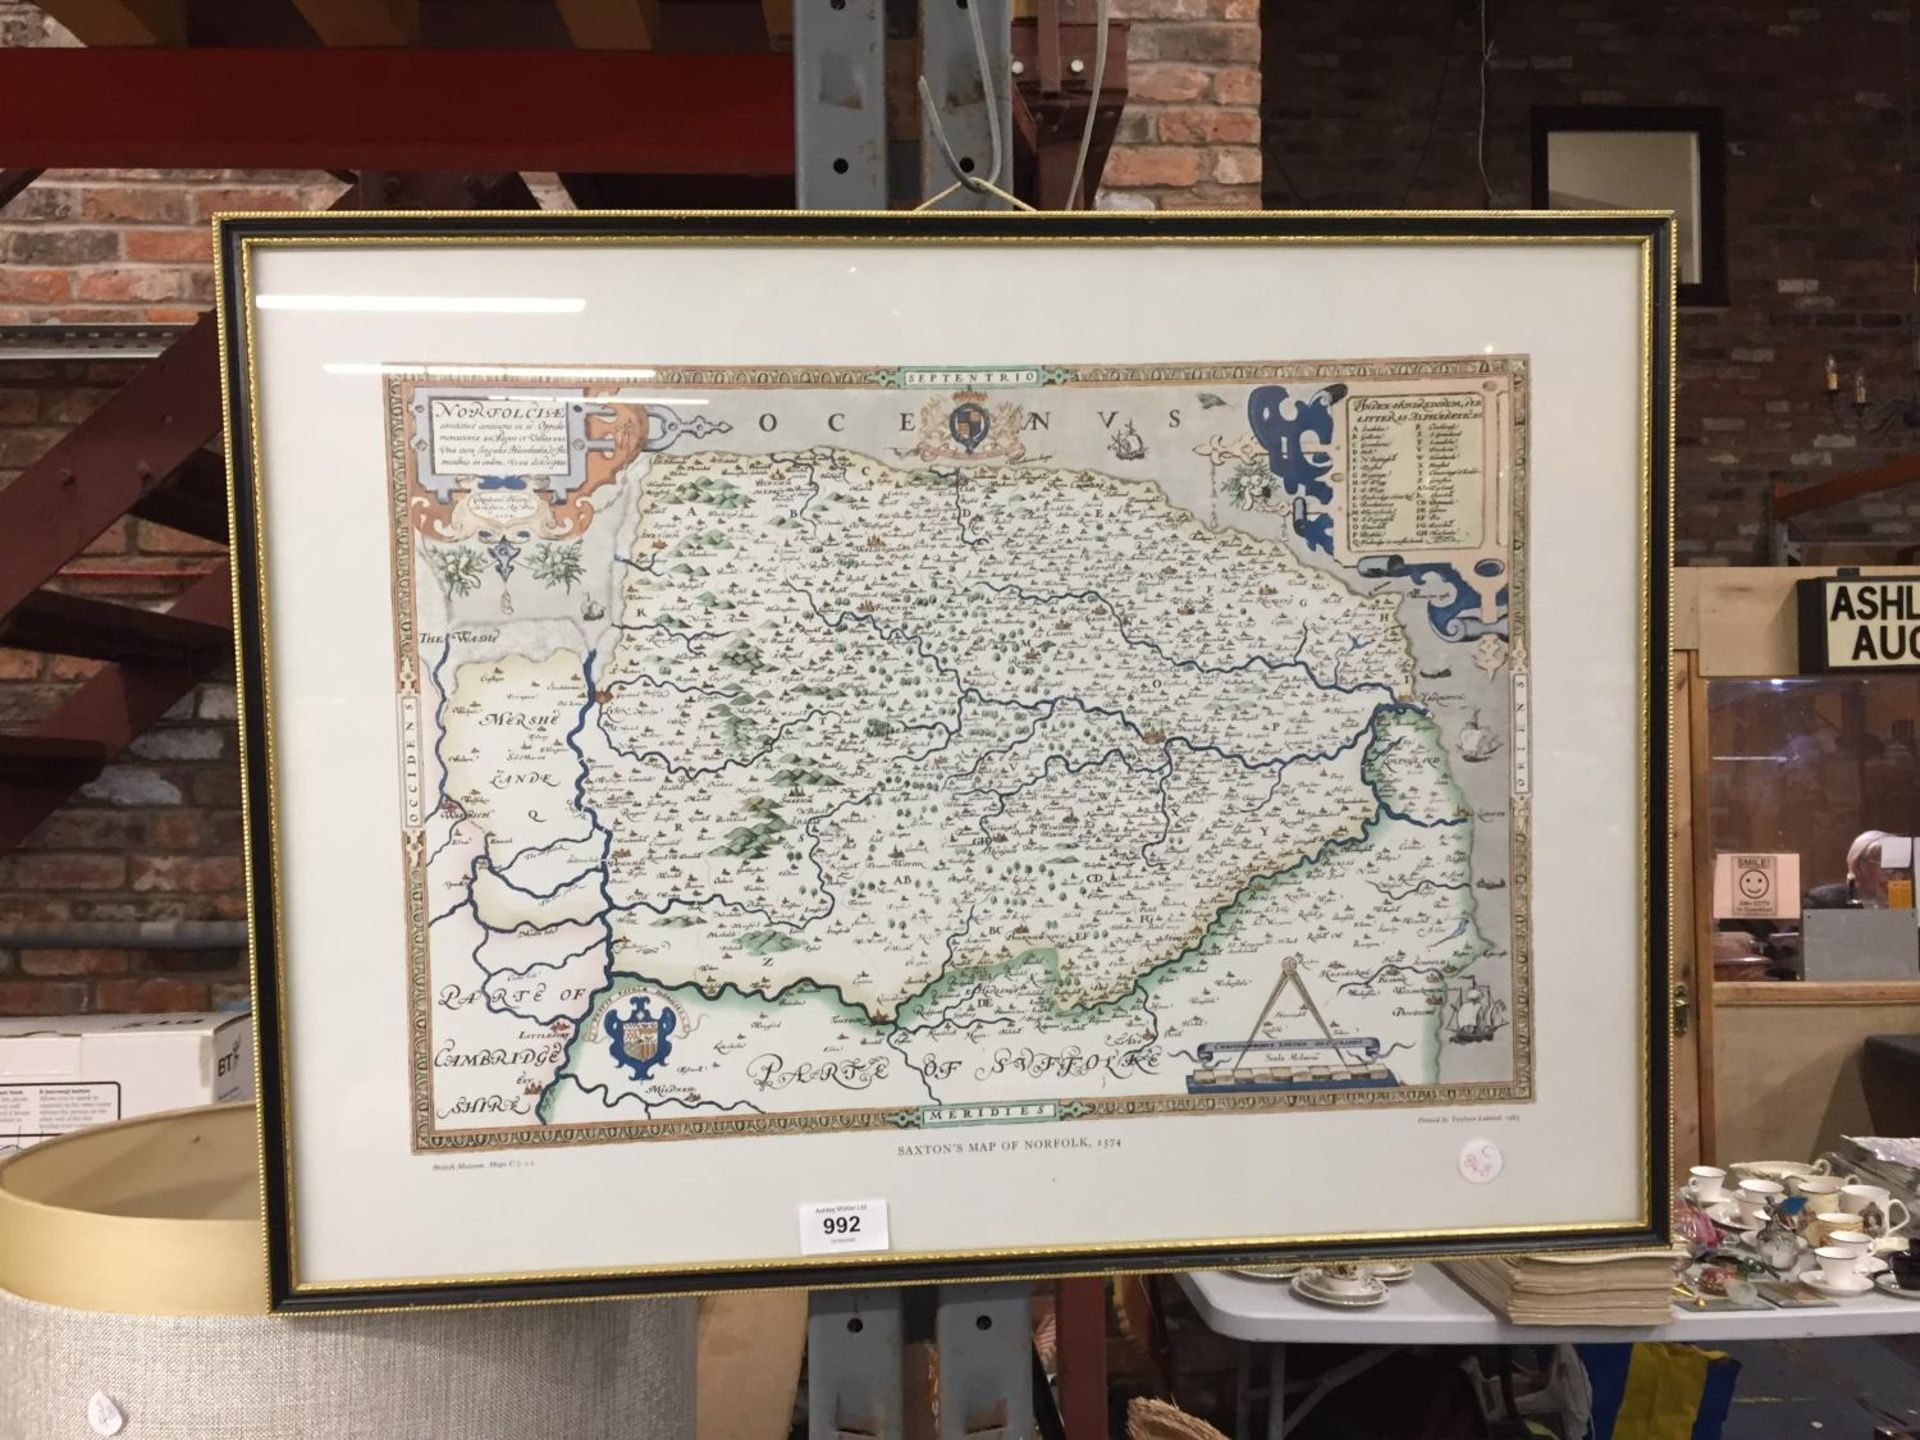 A FRAMED VINTAGE PRINT OF 'SAXTON'S MAP OF NORFOLK 1574'